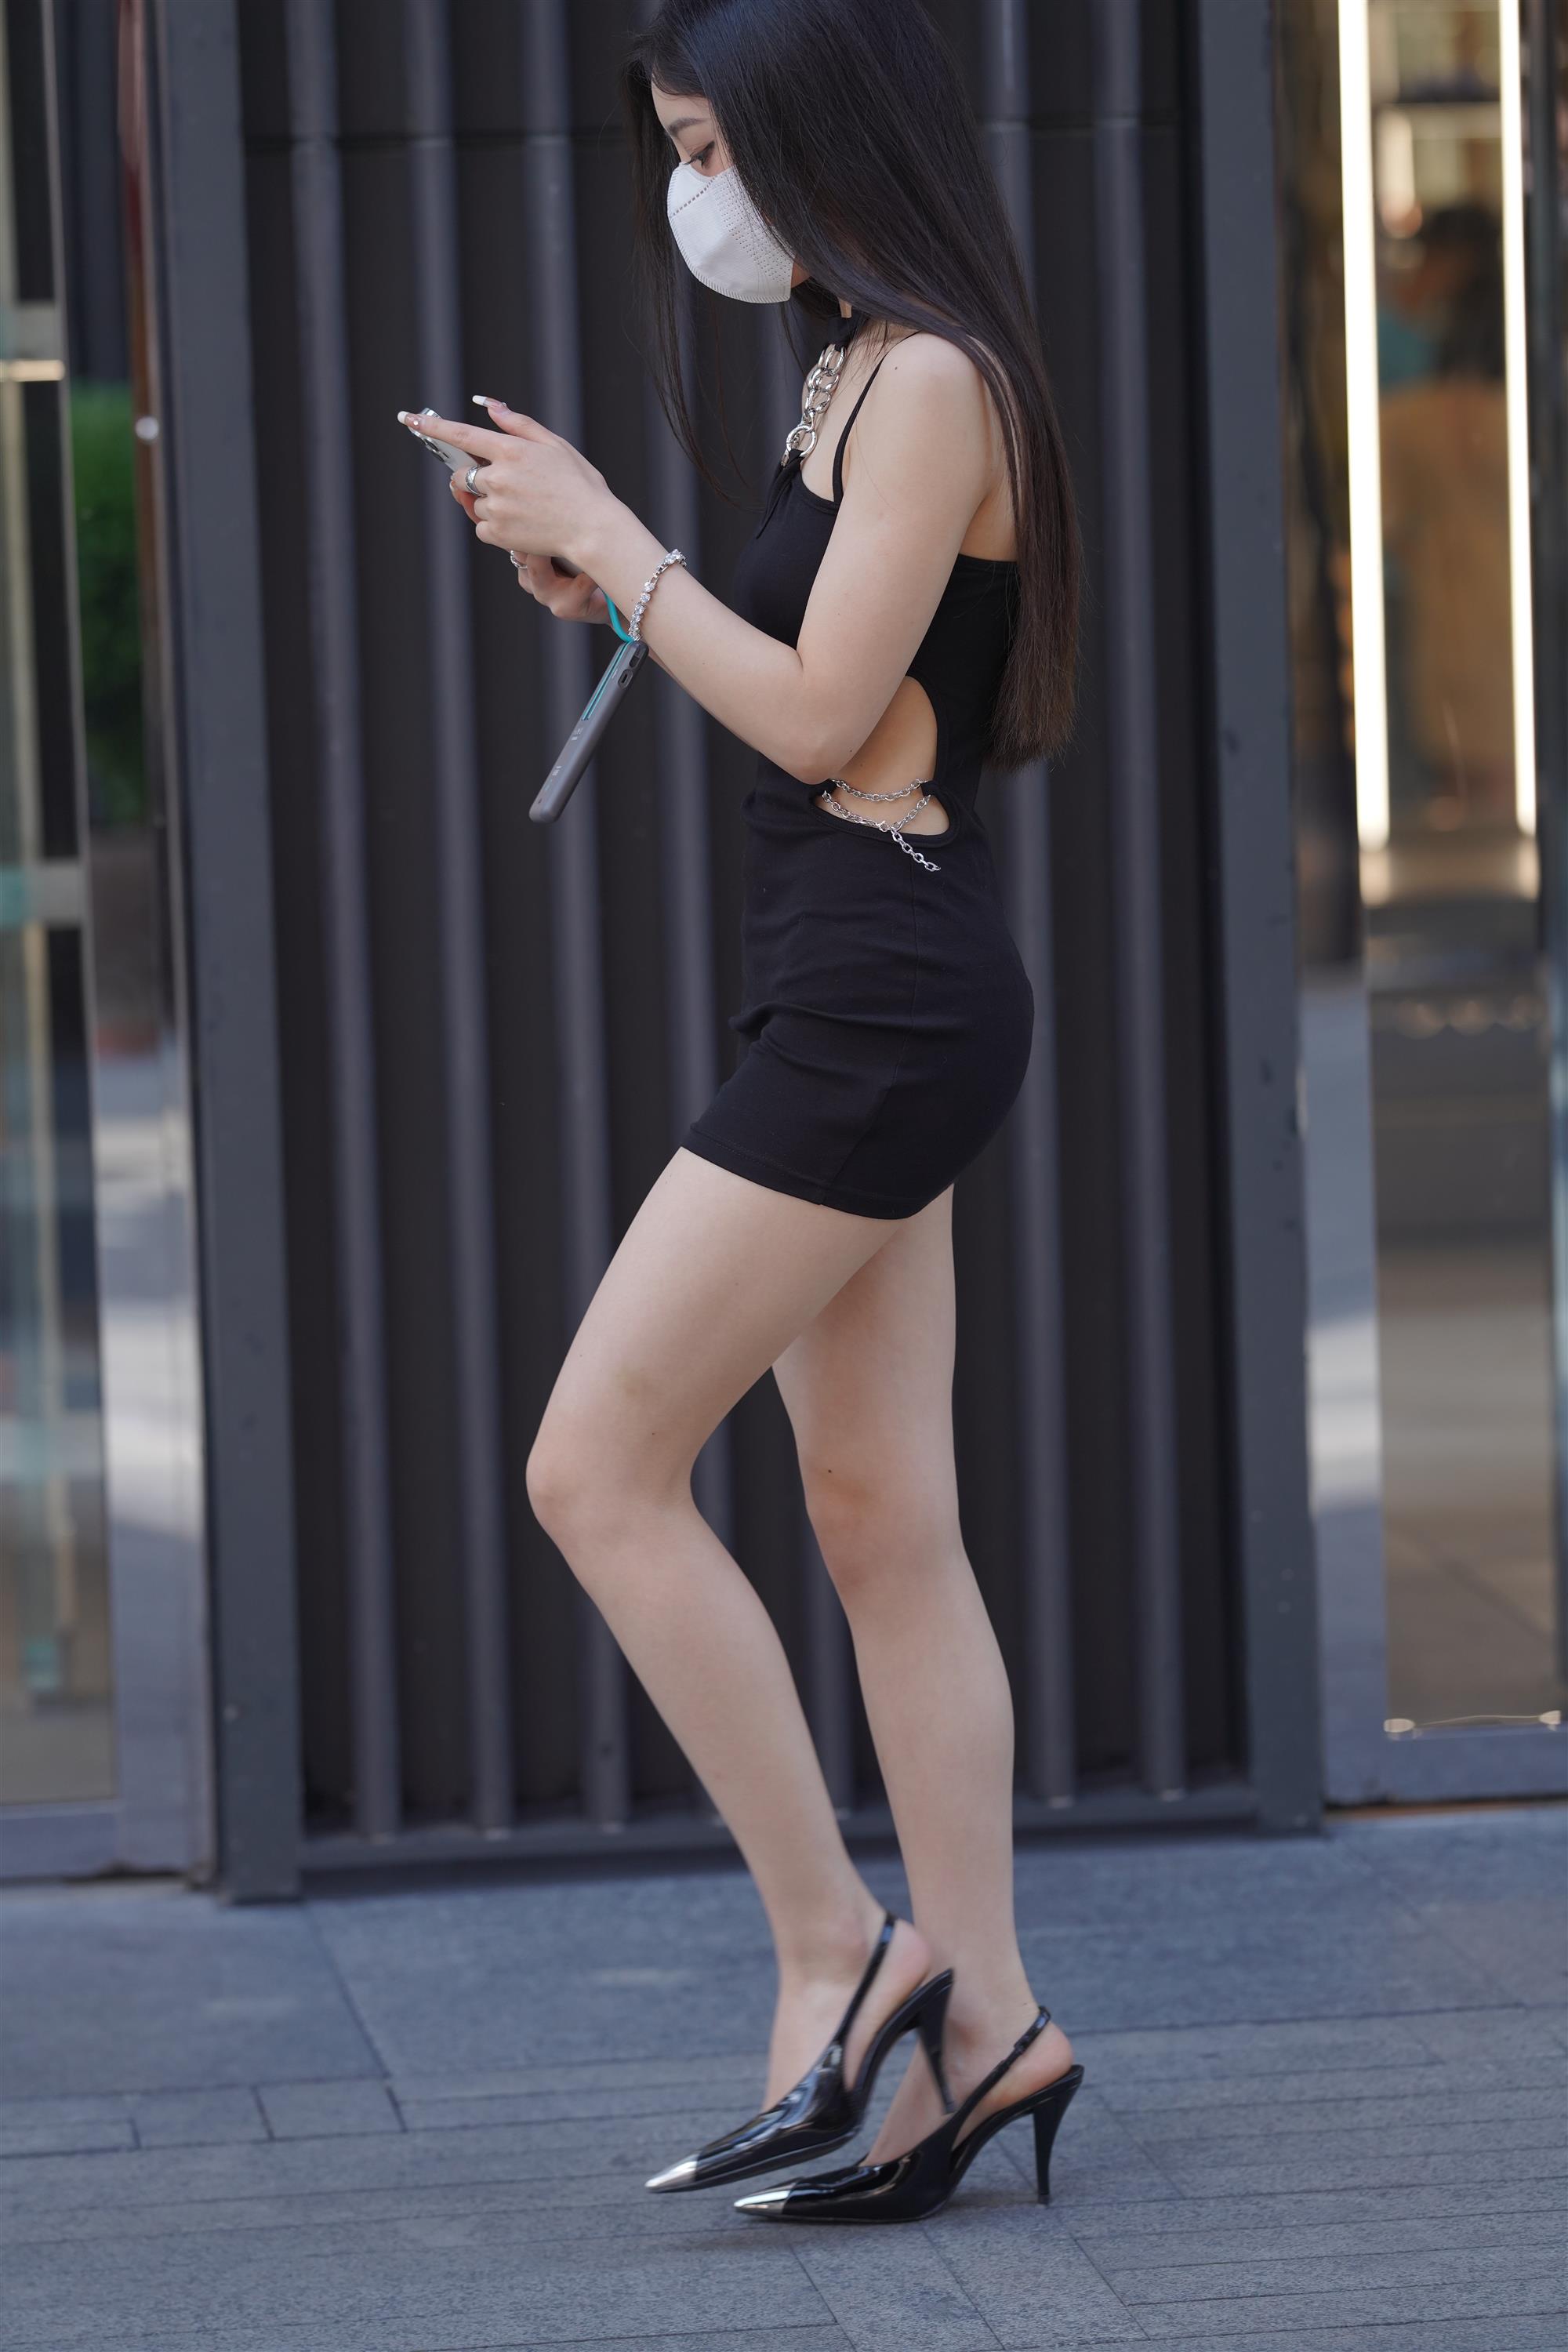 Street girl in a black slip dress - 53.jpg